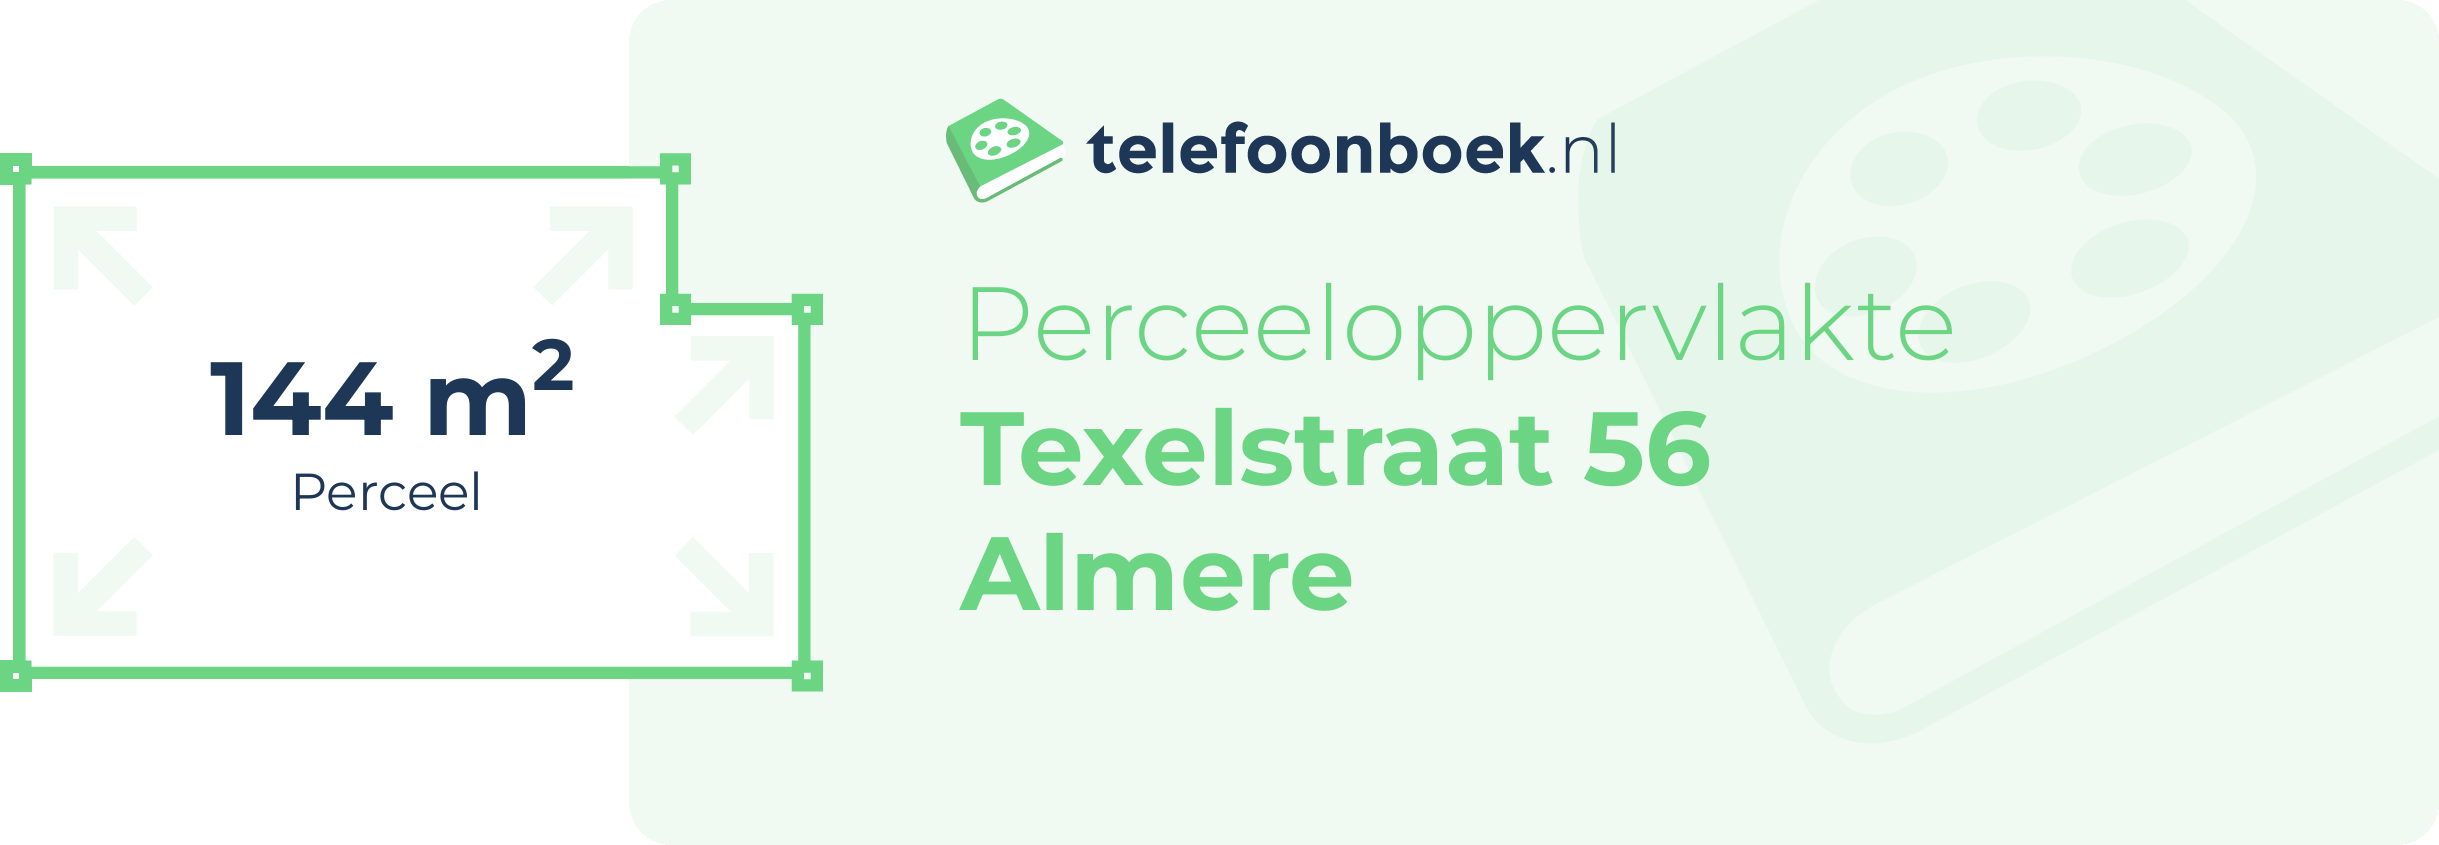 Perceeloppervlakte Texelstraat 56 Almere